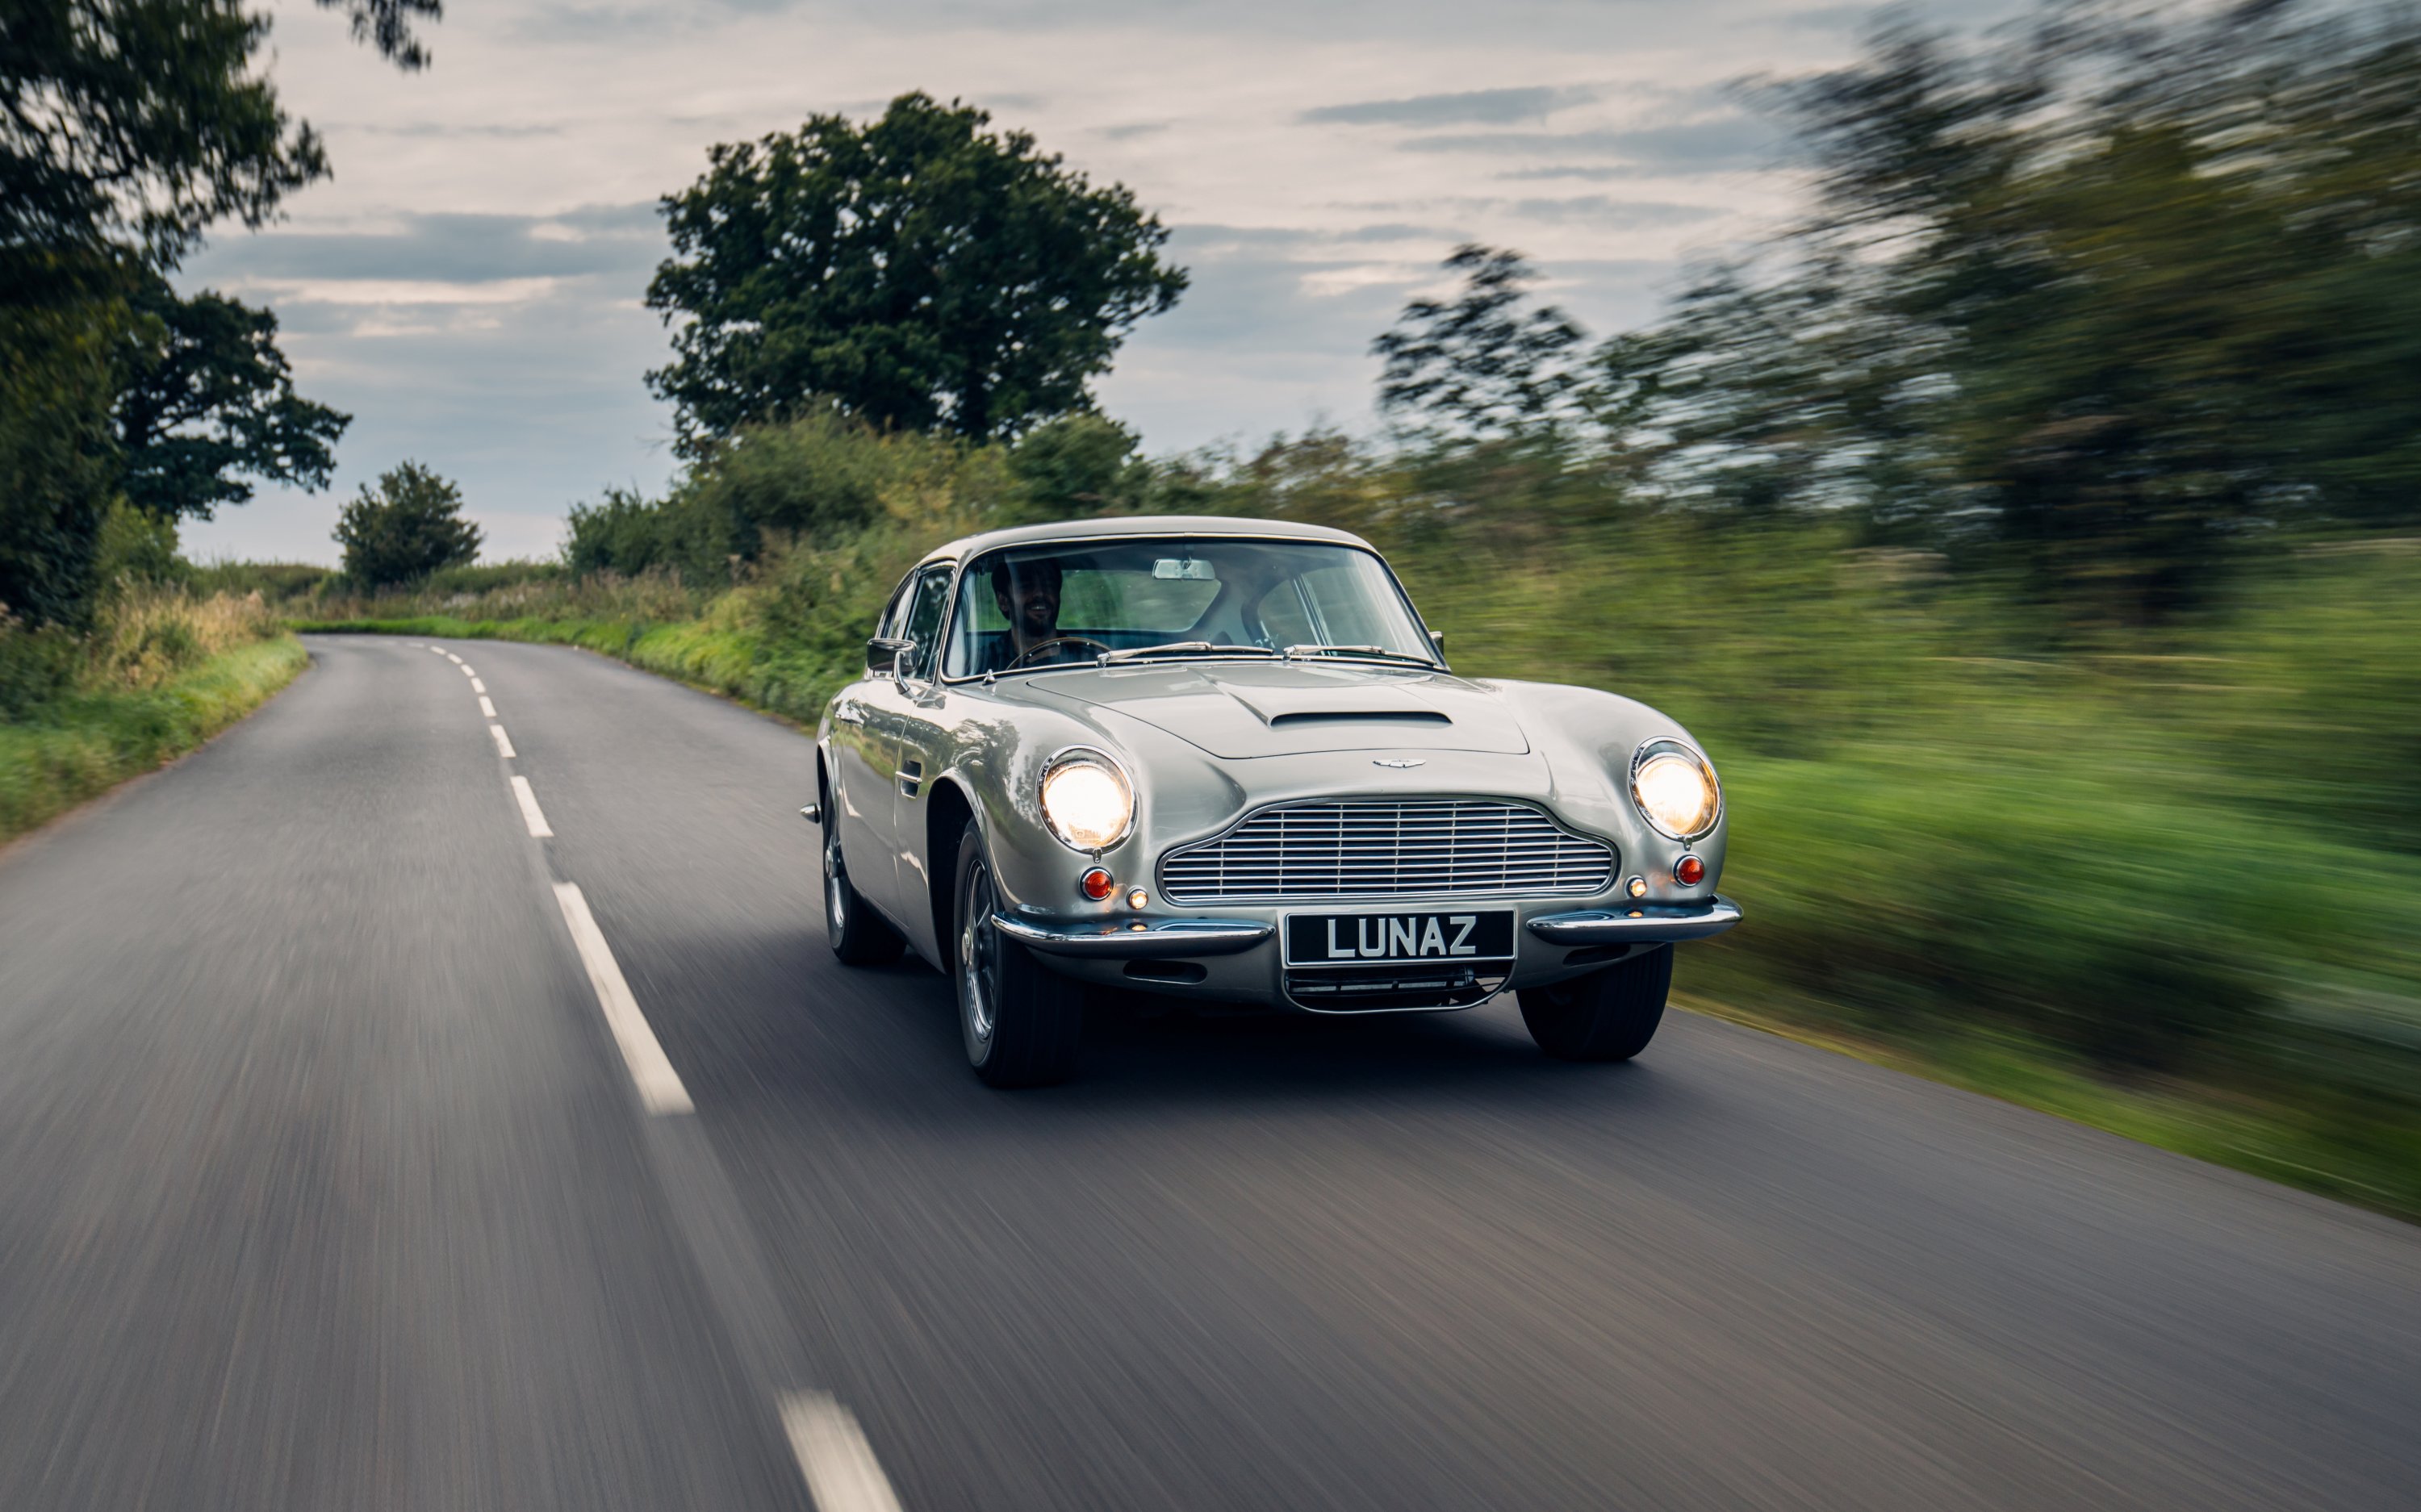 Daniel Craig 007 James Bond Aston Martin Car Photoshoot Wallpapers